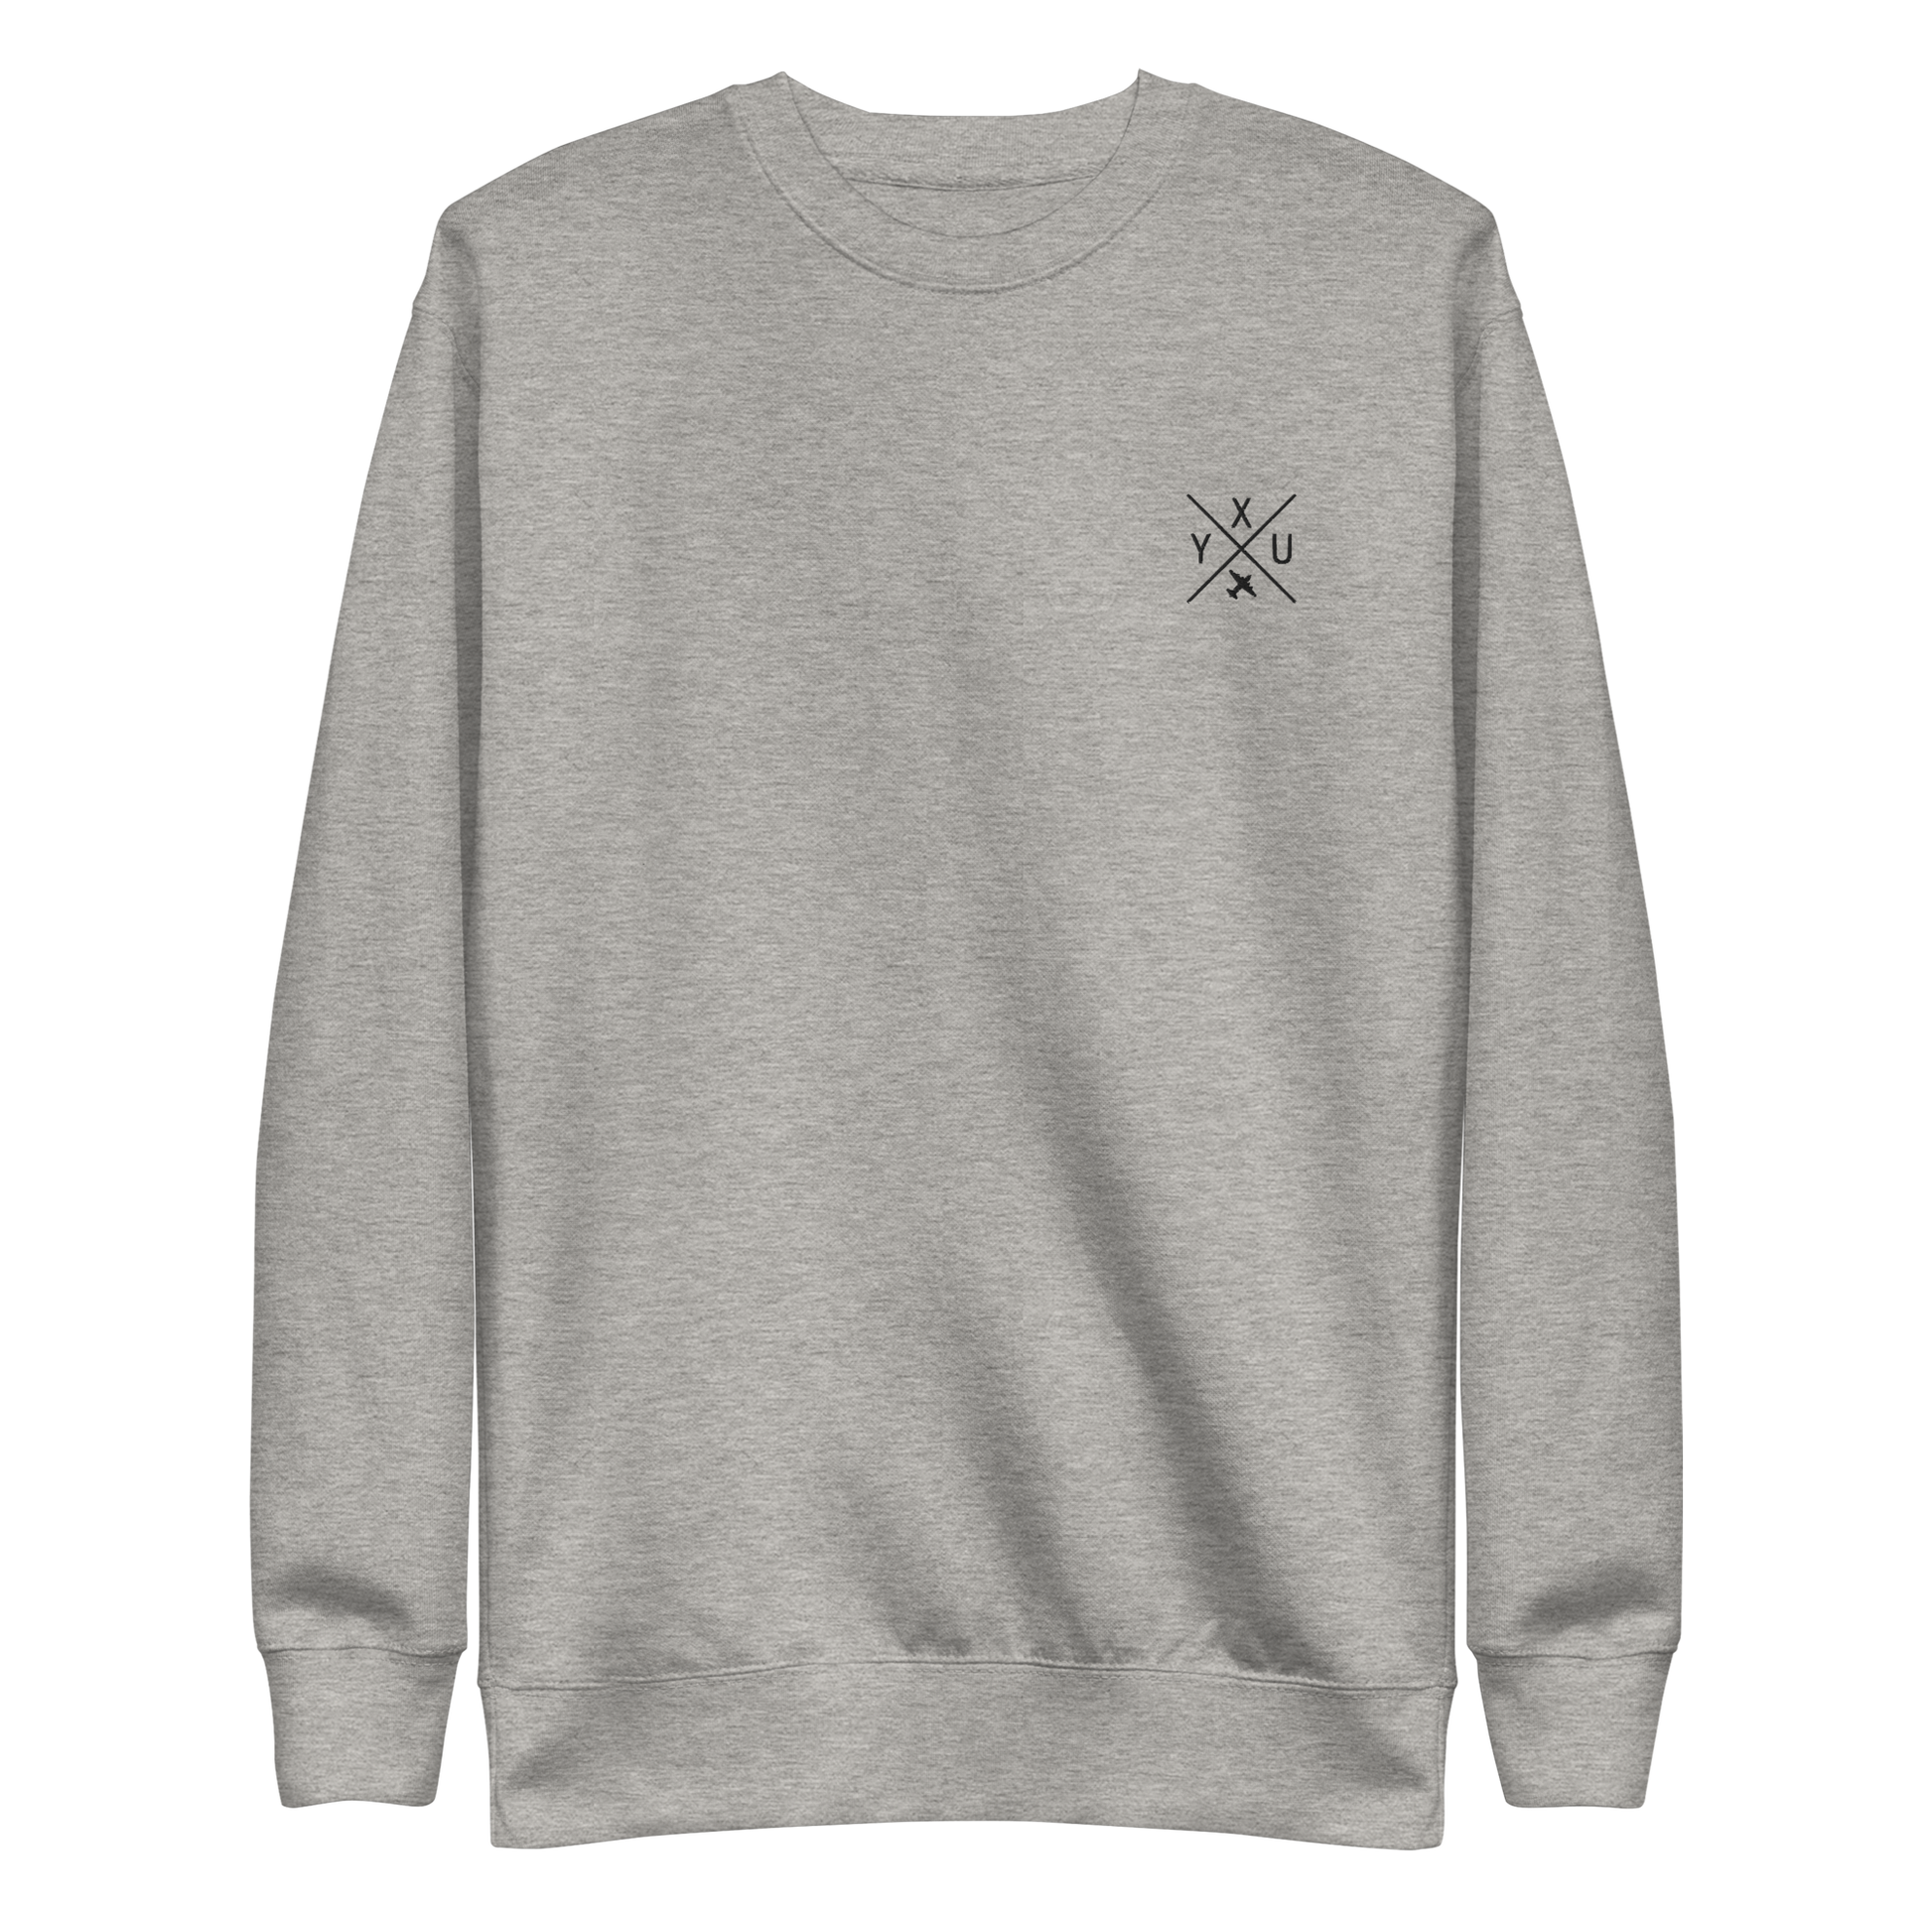 YHM Designs - YXU London Premium Sweatshirt - Crossed-X Design with Airport Code and Vintage Propliner - Black Embroidery - Image 02